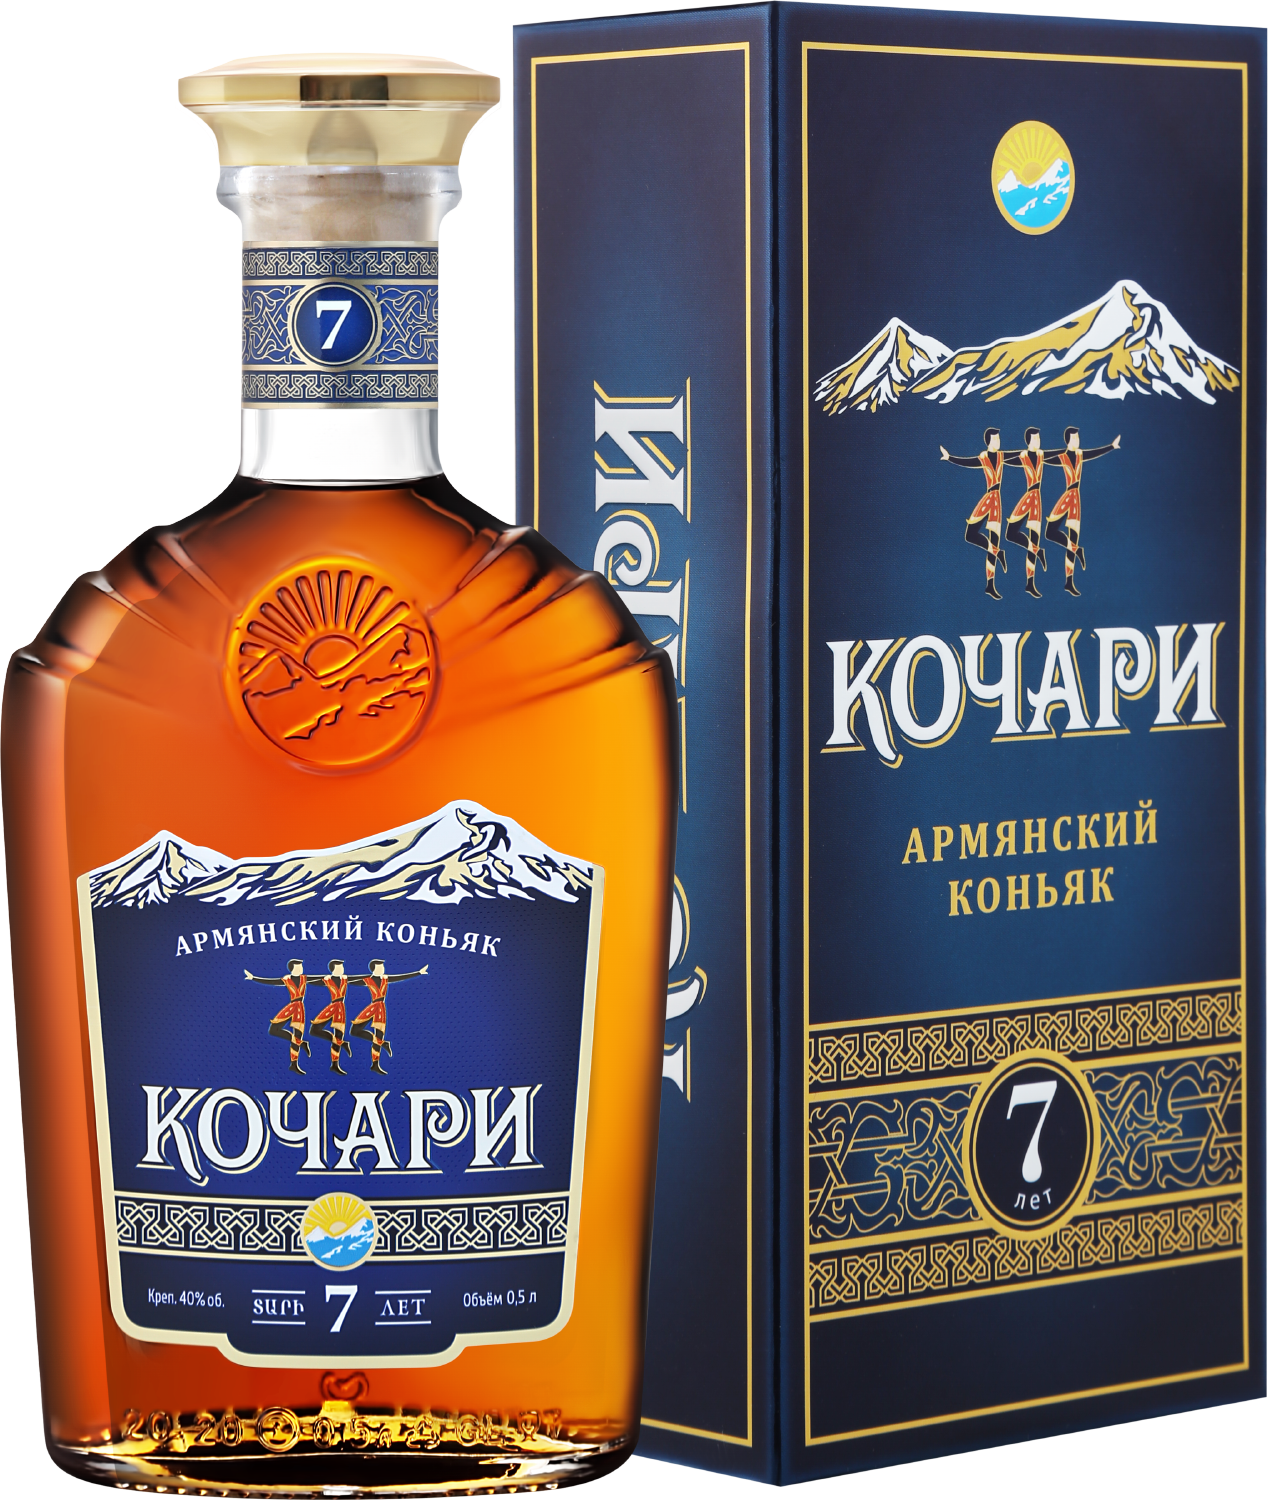 kochari armenian brandy 6 y o Kochari Armenian Brandy 7 Y.O. (gift box)